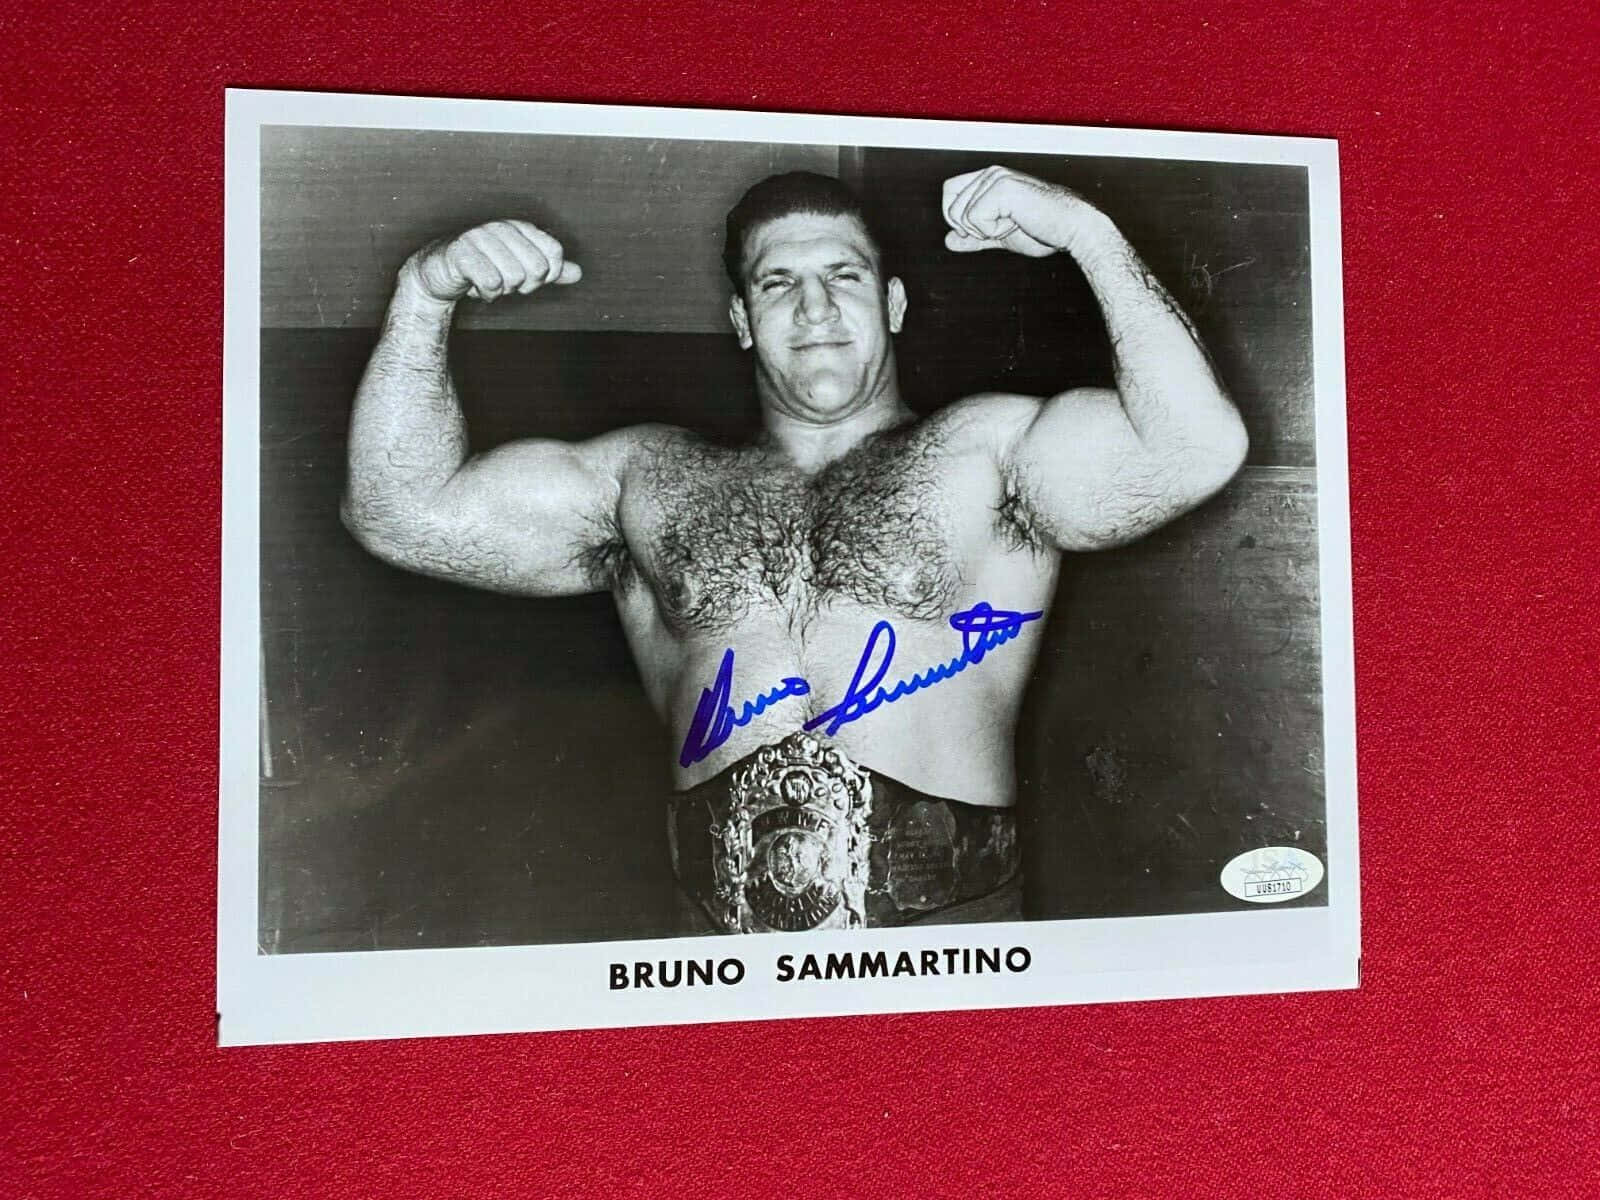 Legendary Wrestler Bruno Sammartino Autographed Black and White Photograph Wallpaper